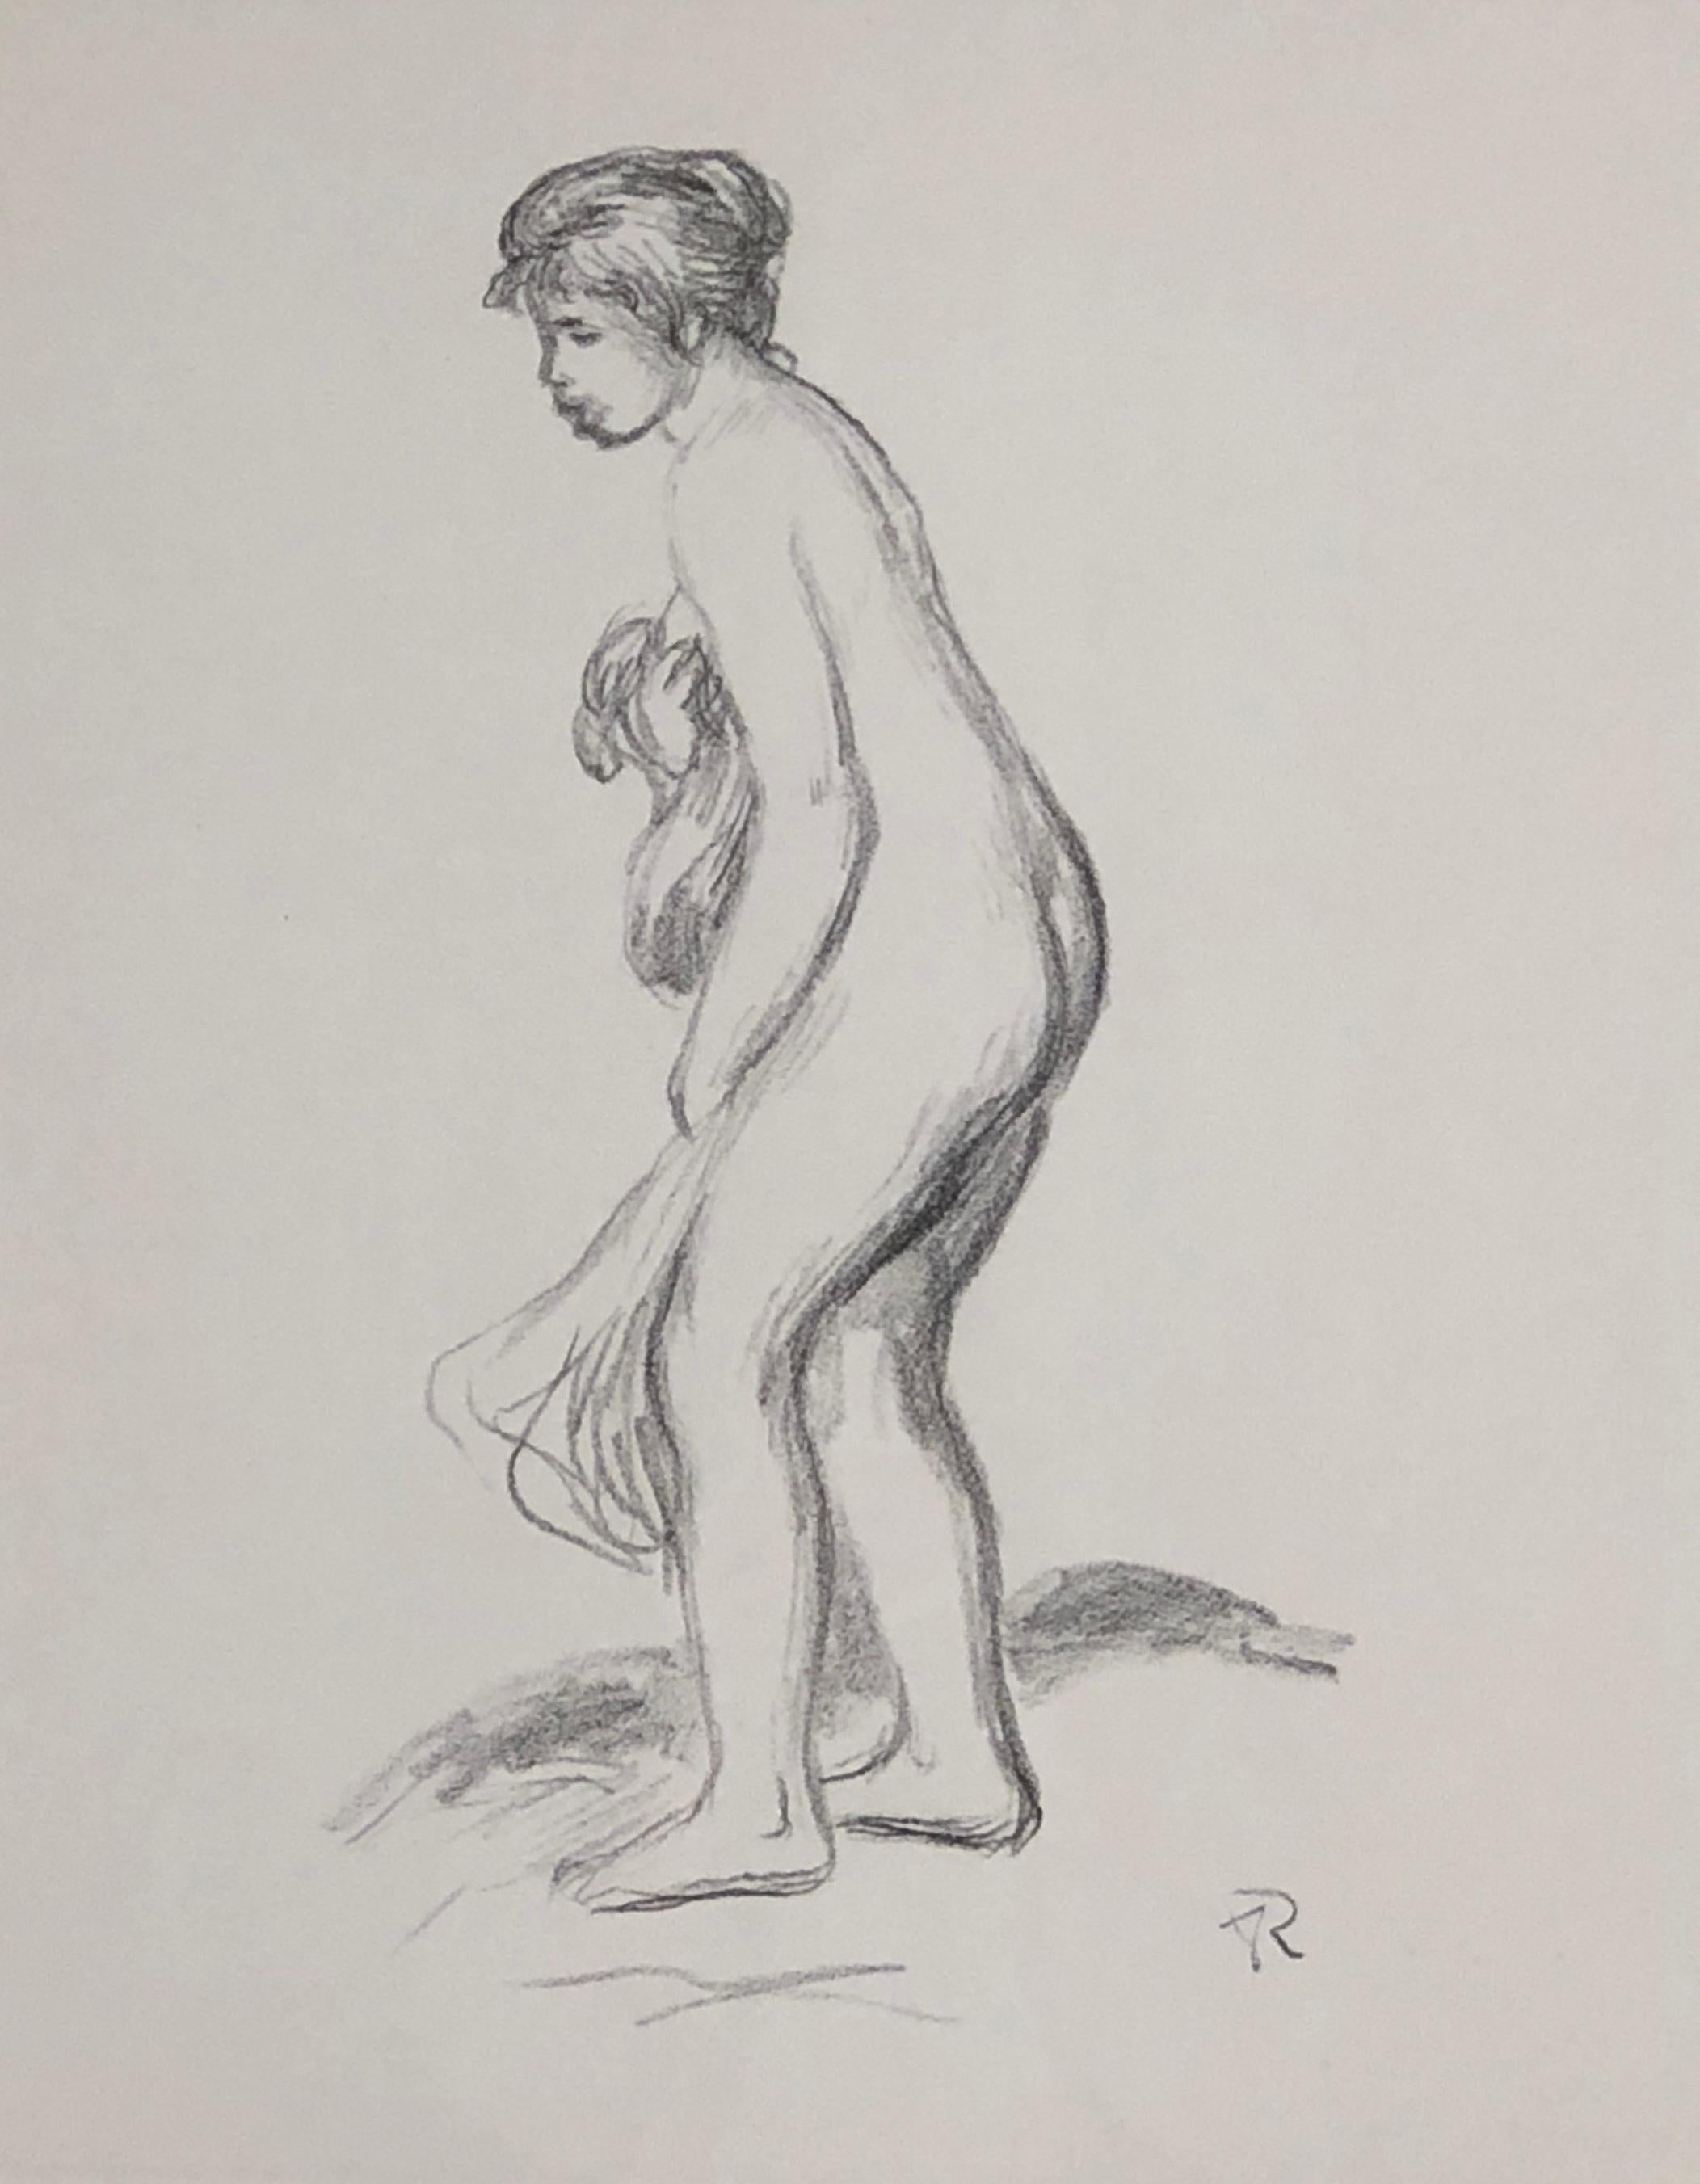 Pierre- Auguste Renoir, "Woman Bathing, Standing, Full Length Profile", litho